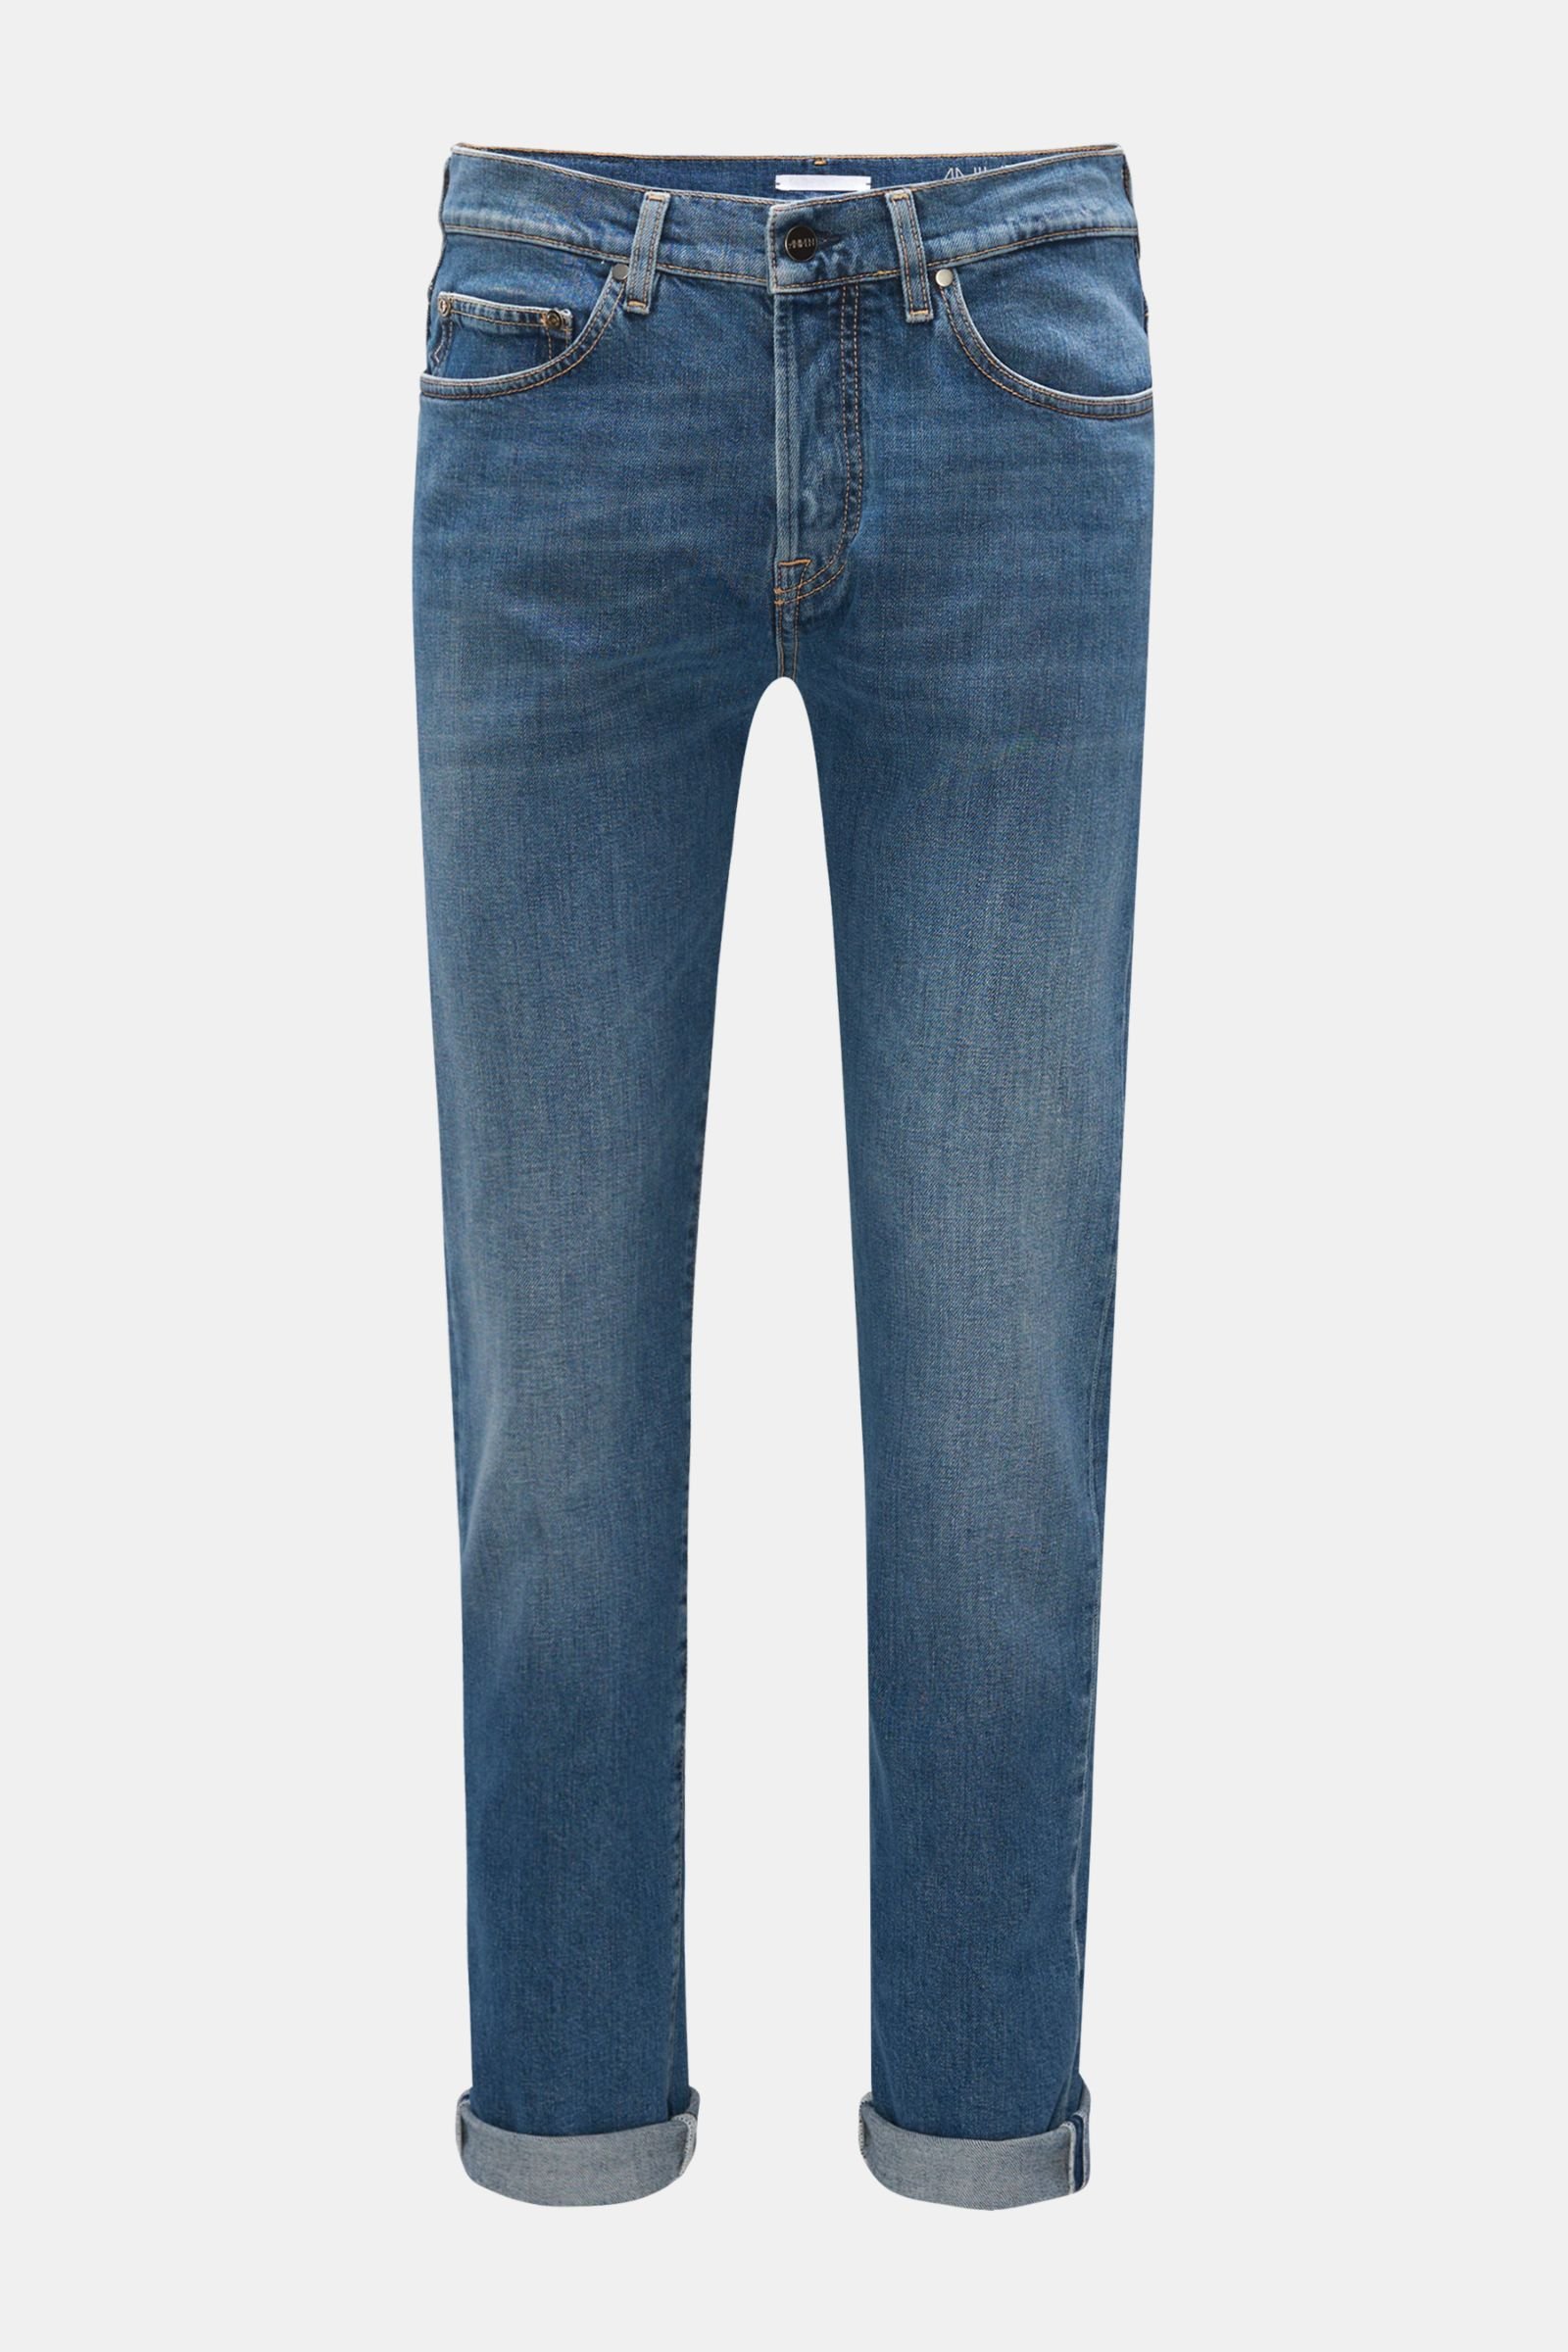 Jeans 'Kaden Pants' grey-blue